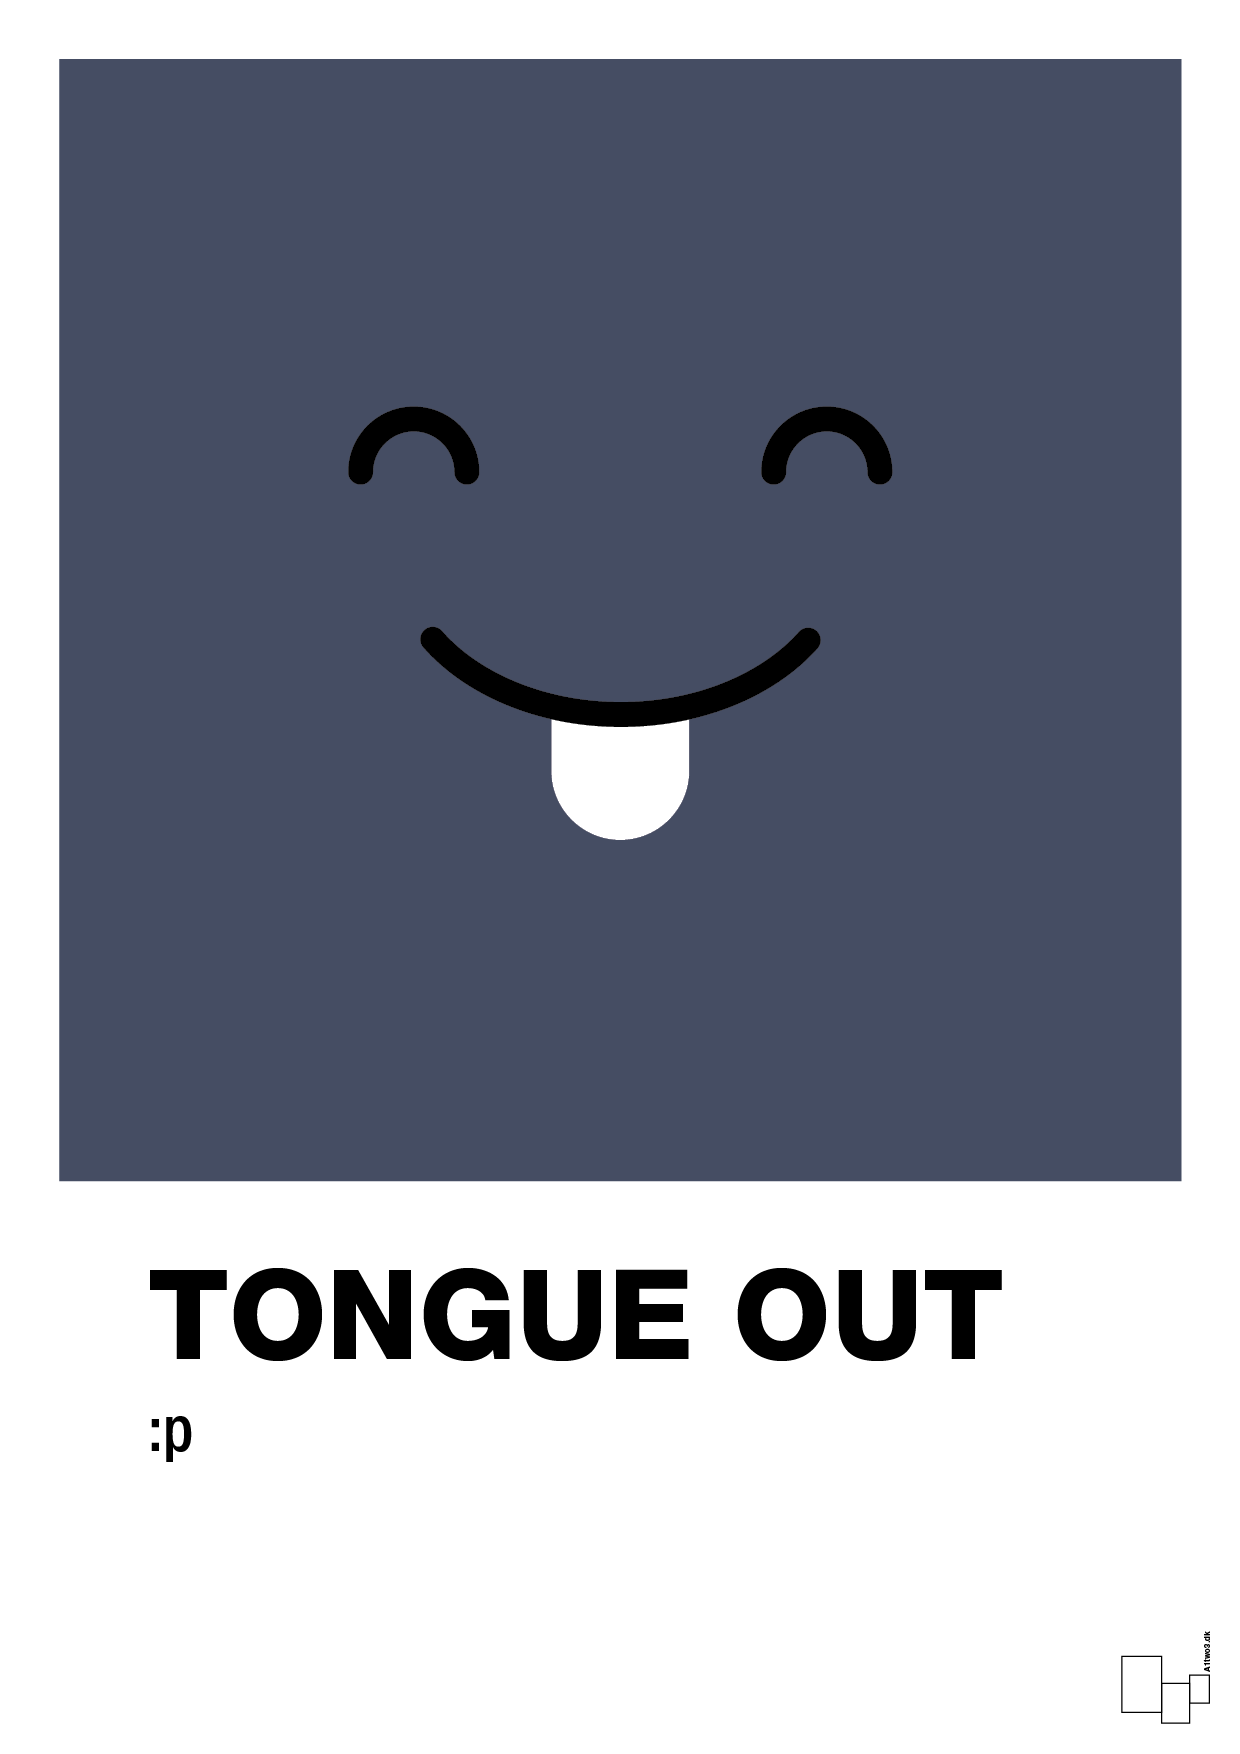 tongue out smiley - Plakat med Grafik i Petrol